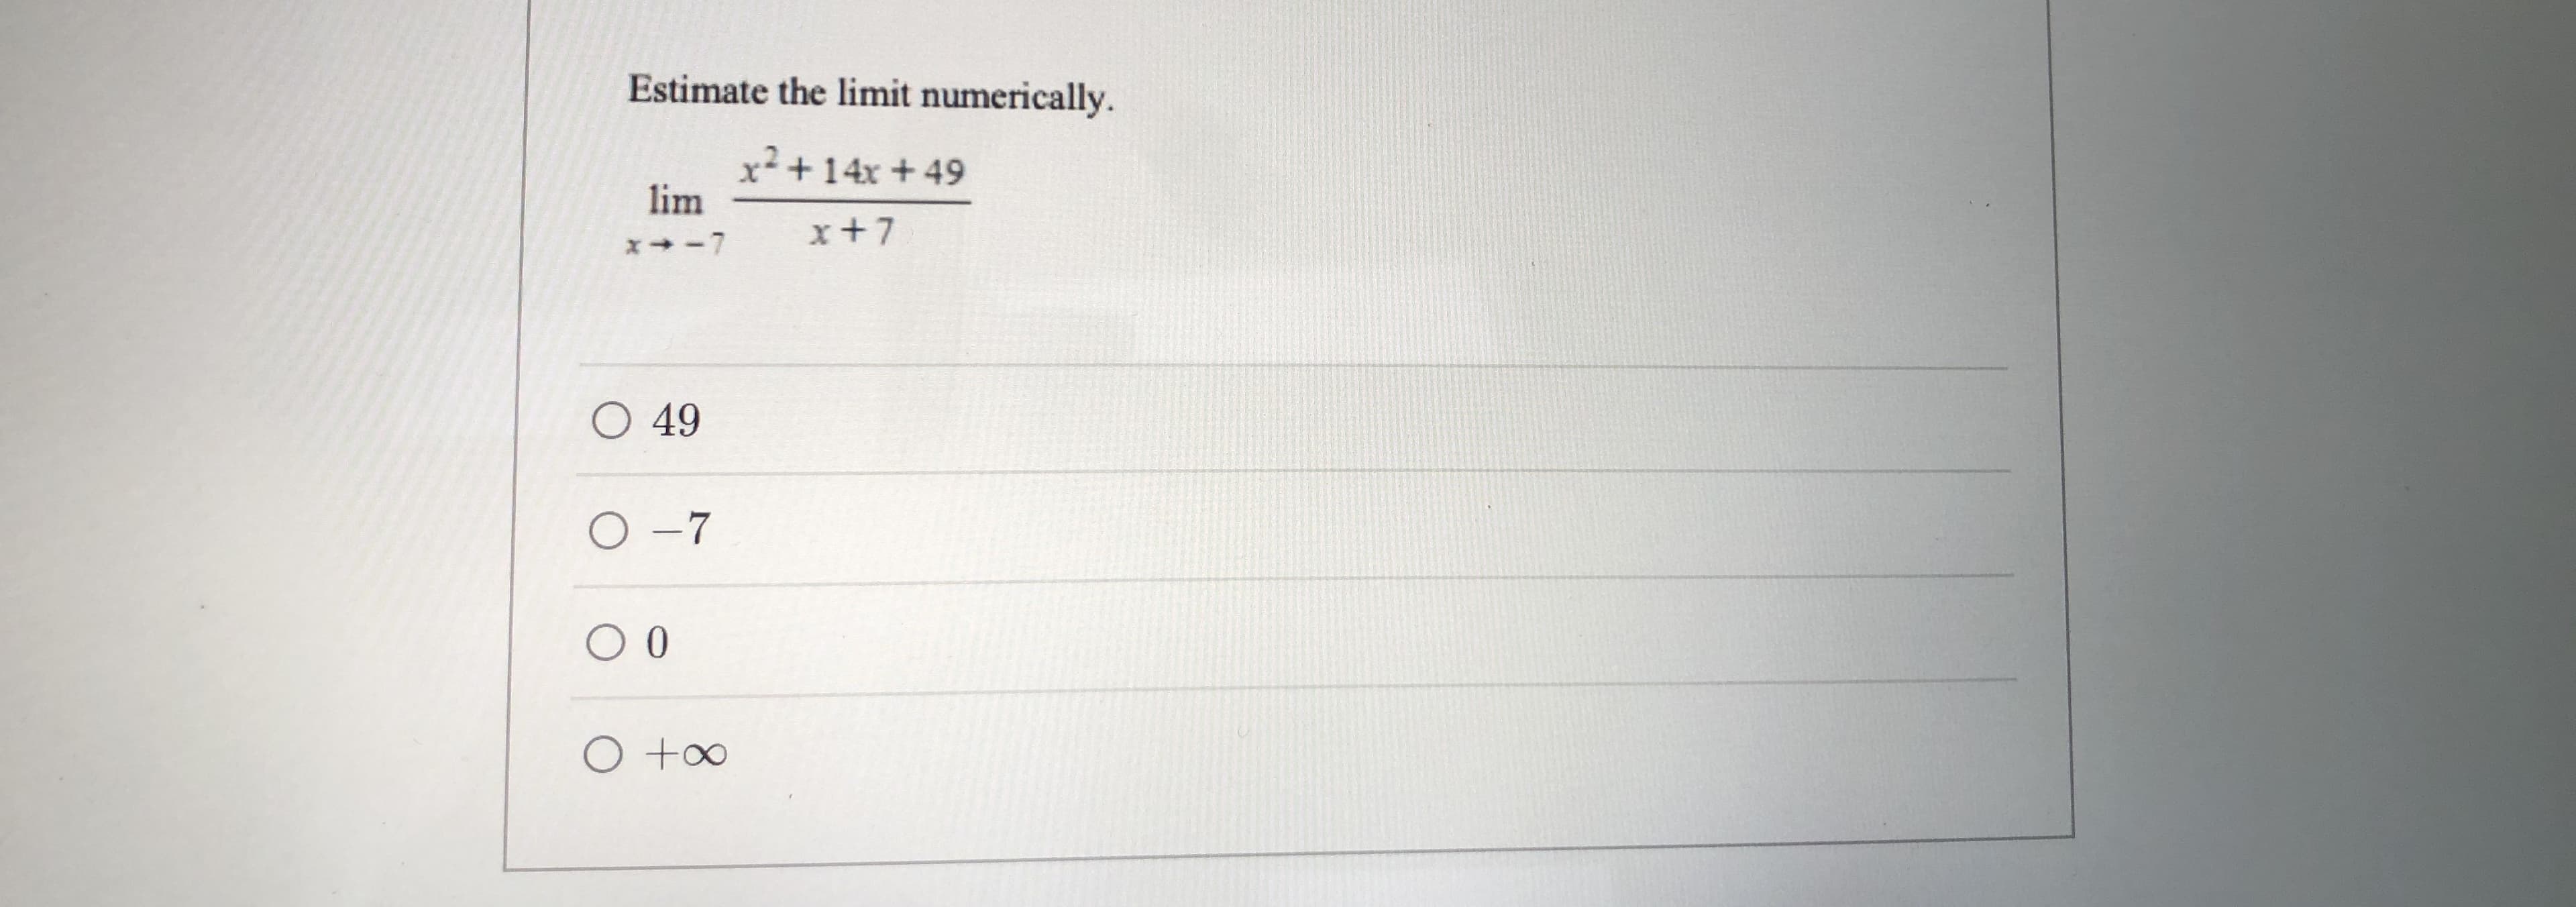 Estimate the limit numerically.
x+14x + 49
lim
x+7
